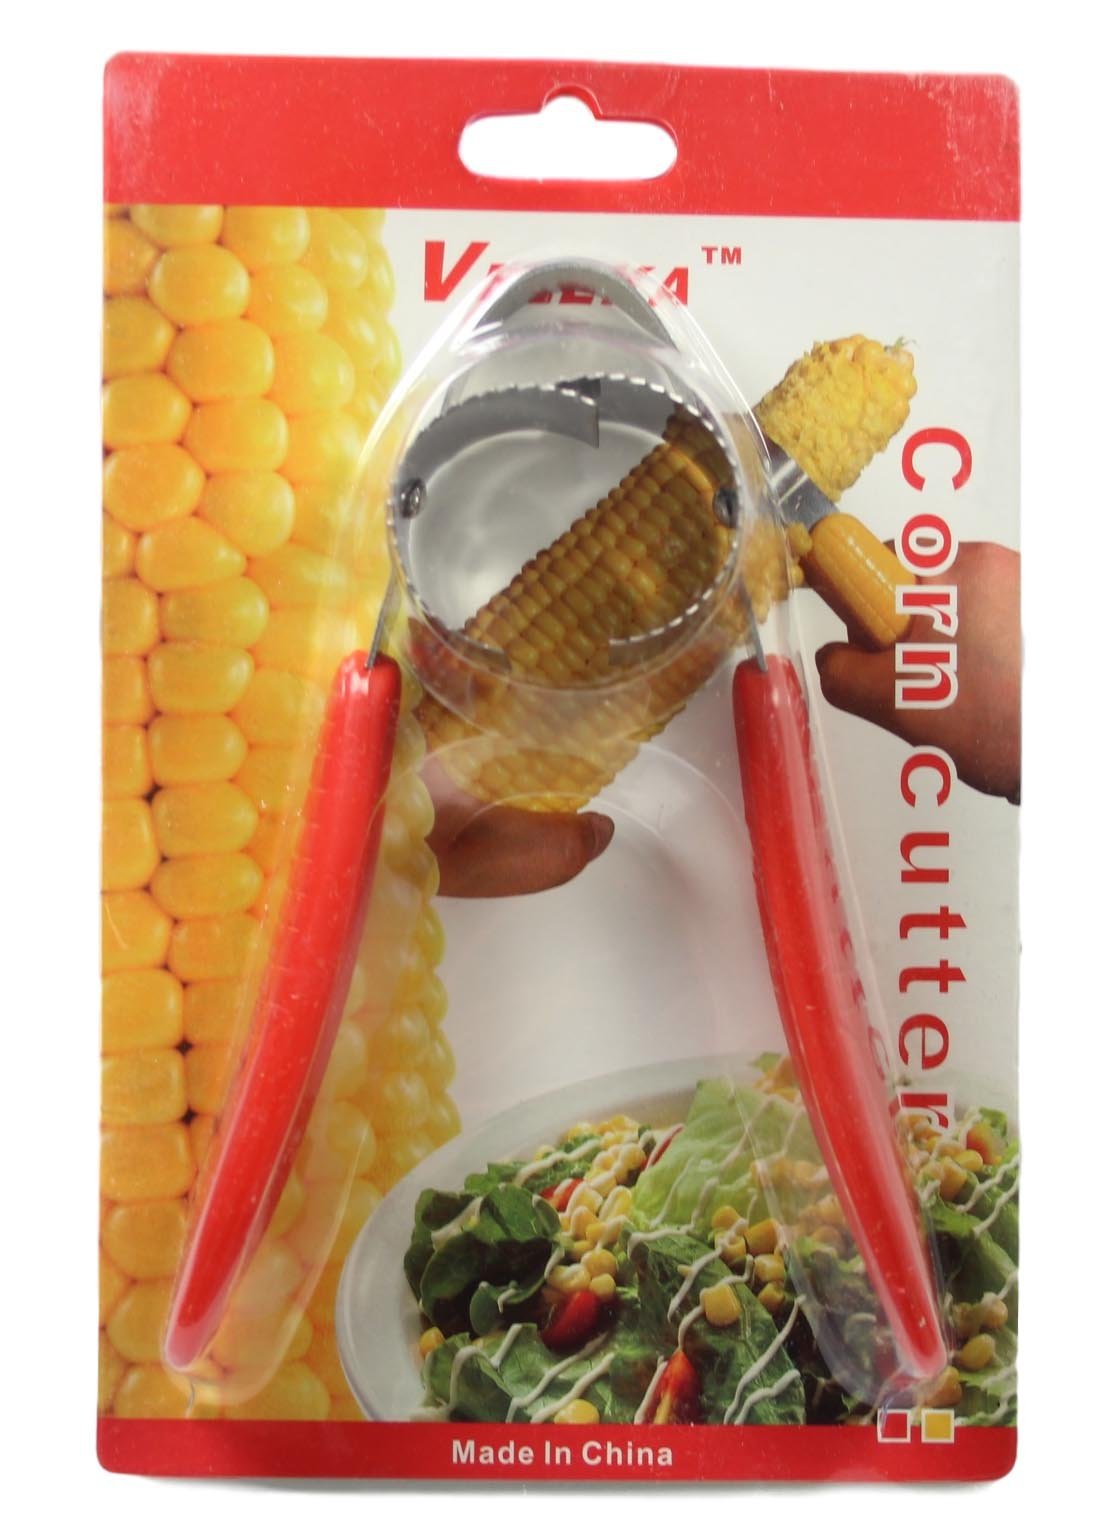 One Step Corn Peeler Thresher Tool Kitchen Cob Kerneler Cutter Stripper Red 5221 (Parcel Rate)